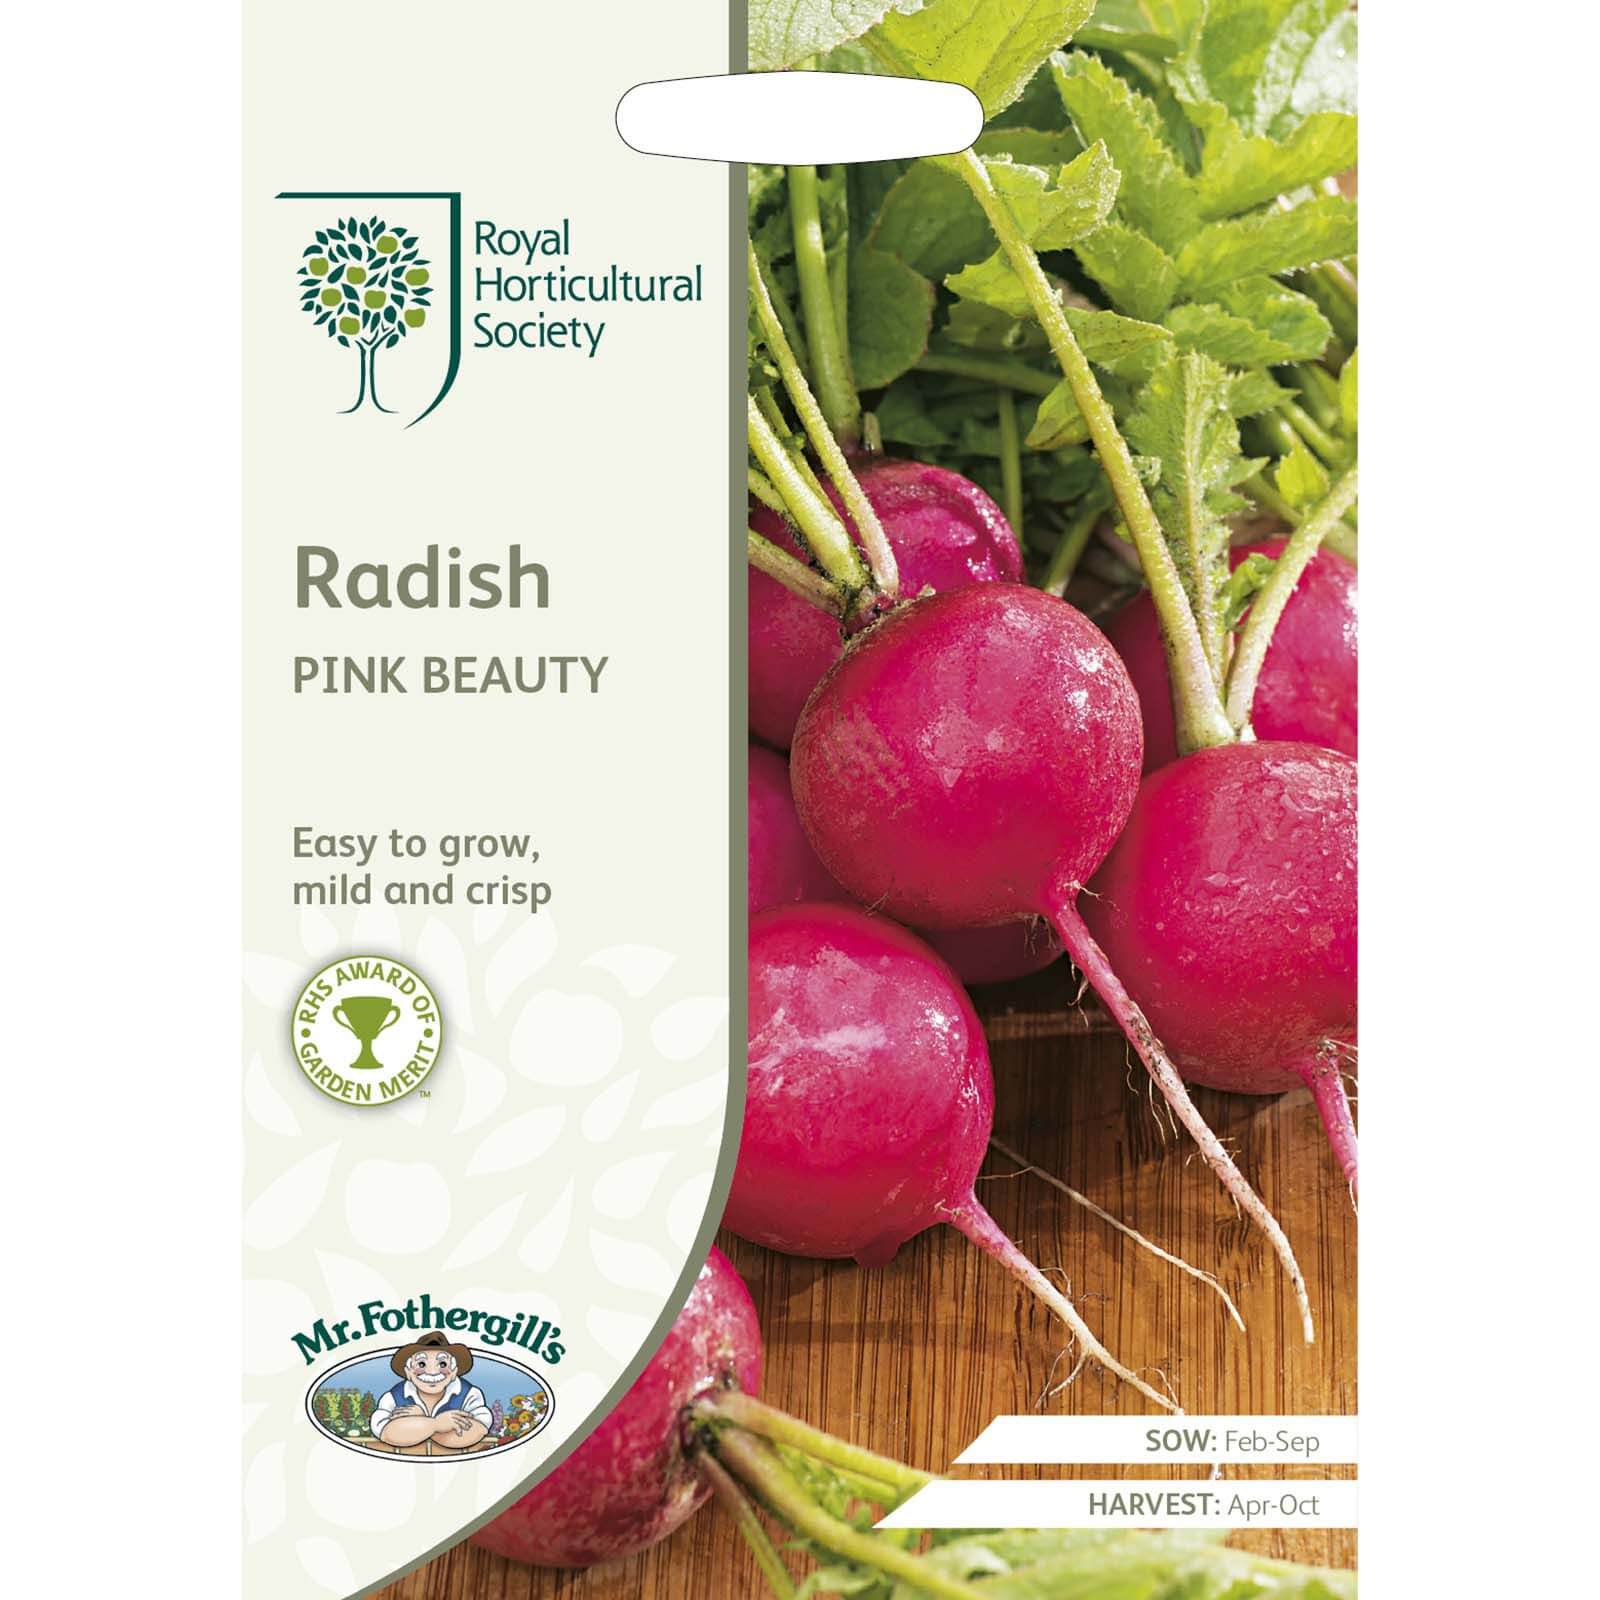 RHS Radish Pink Beauty Seeds